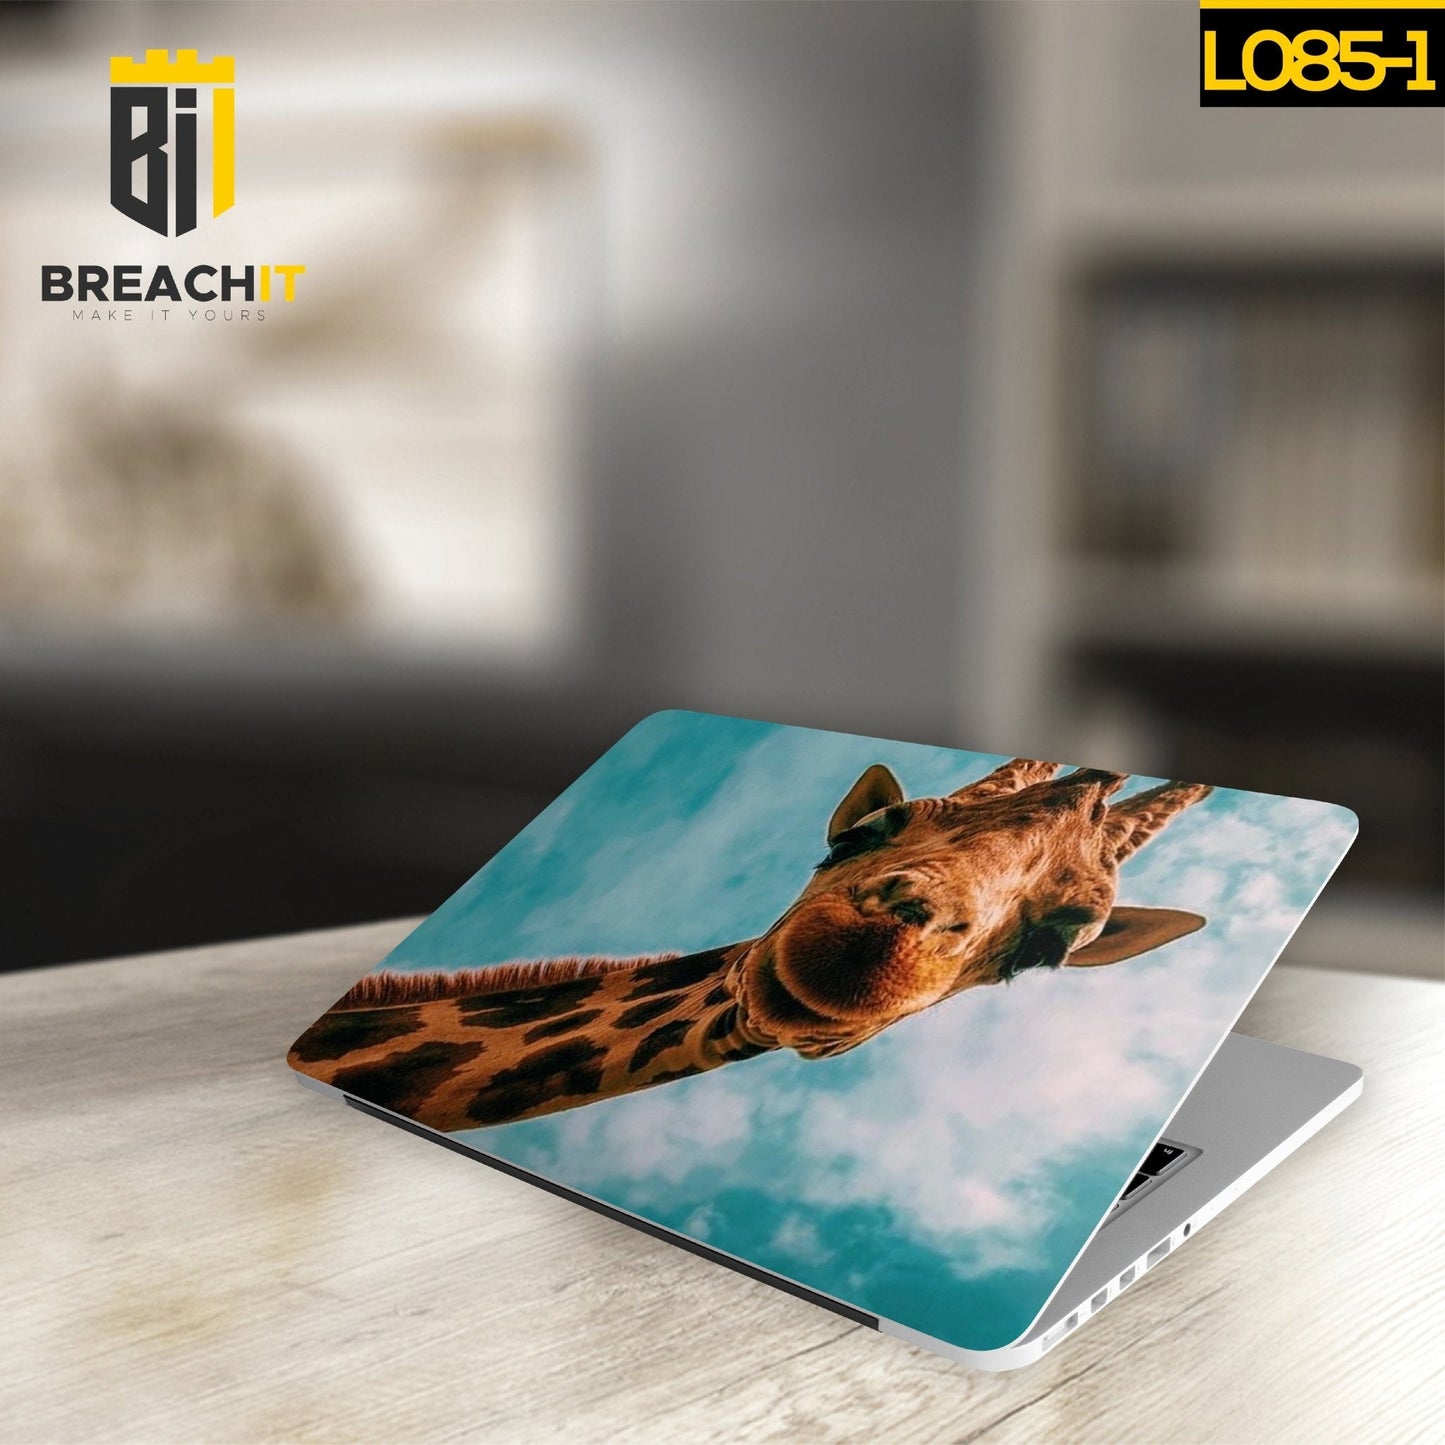 L085-1 Giraffe Laptop Skin - BREACHIT